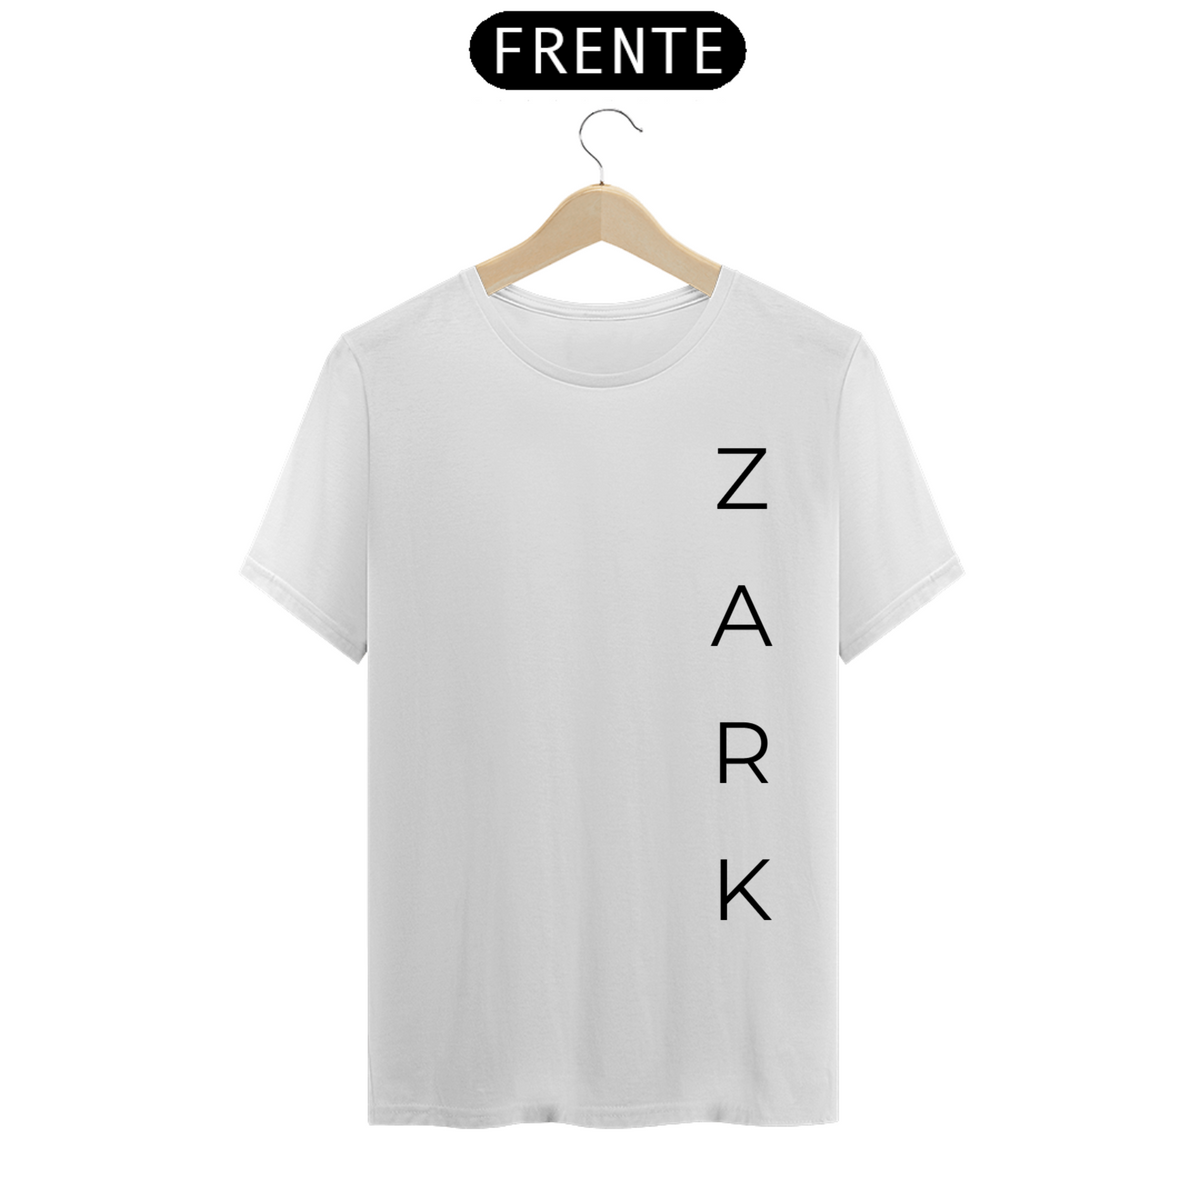 Nome do produto: T-Shirt Day One Zark Wear (Lateral Preta)